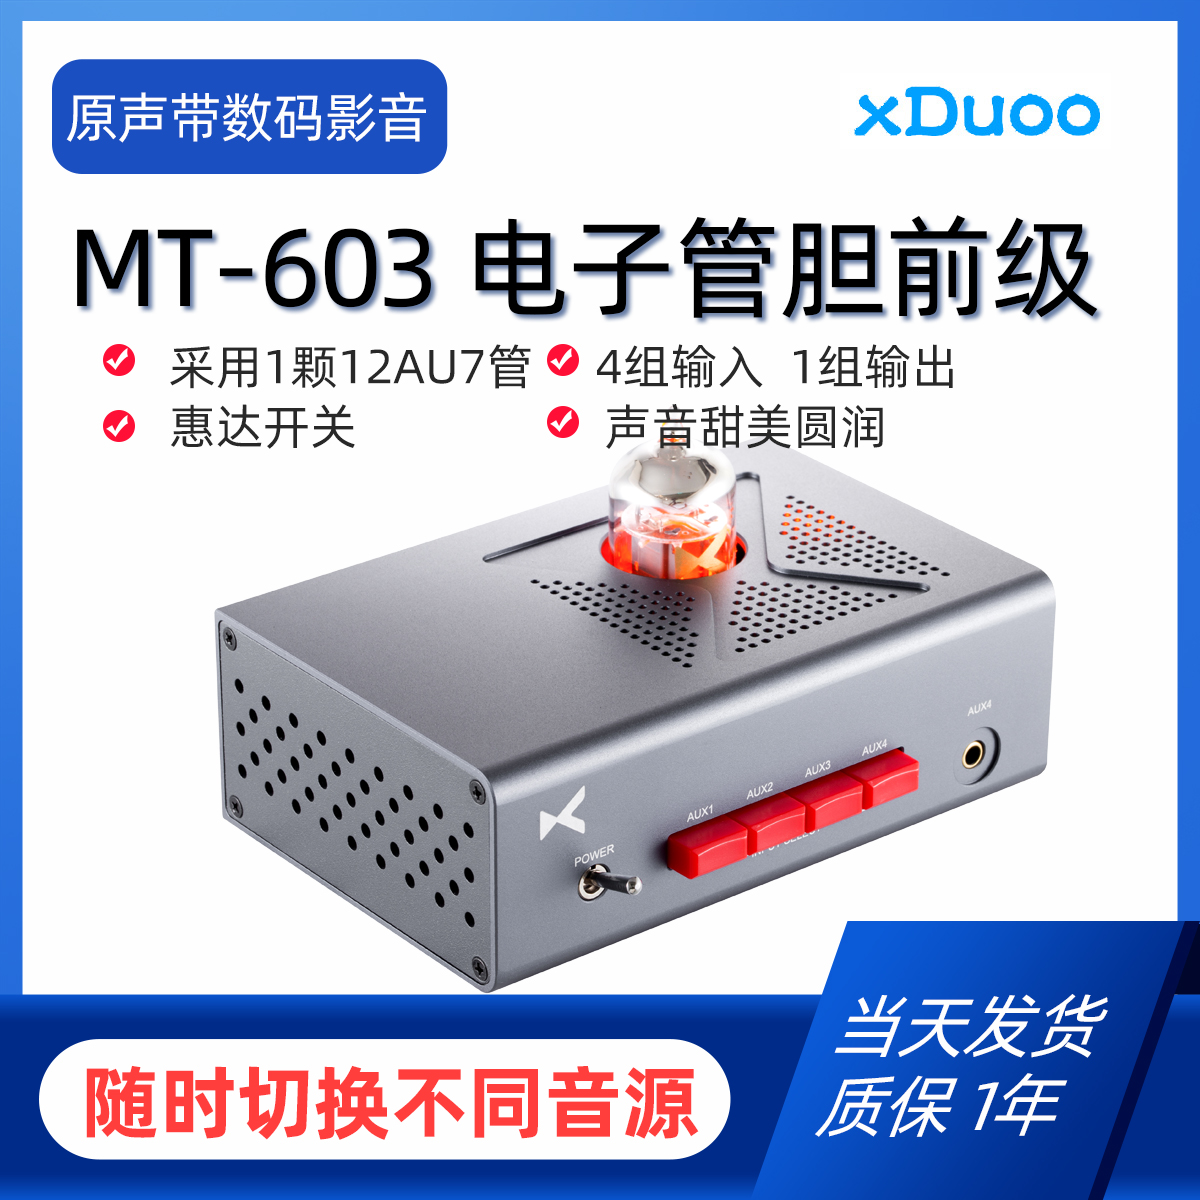 XDUOO MT-603 Ʃ    HIFI ߿ 12AU7 Ʃ   -